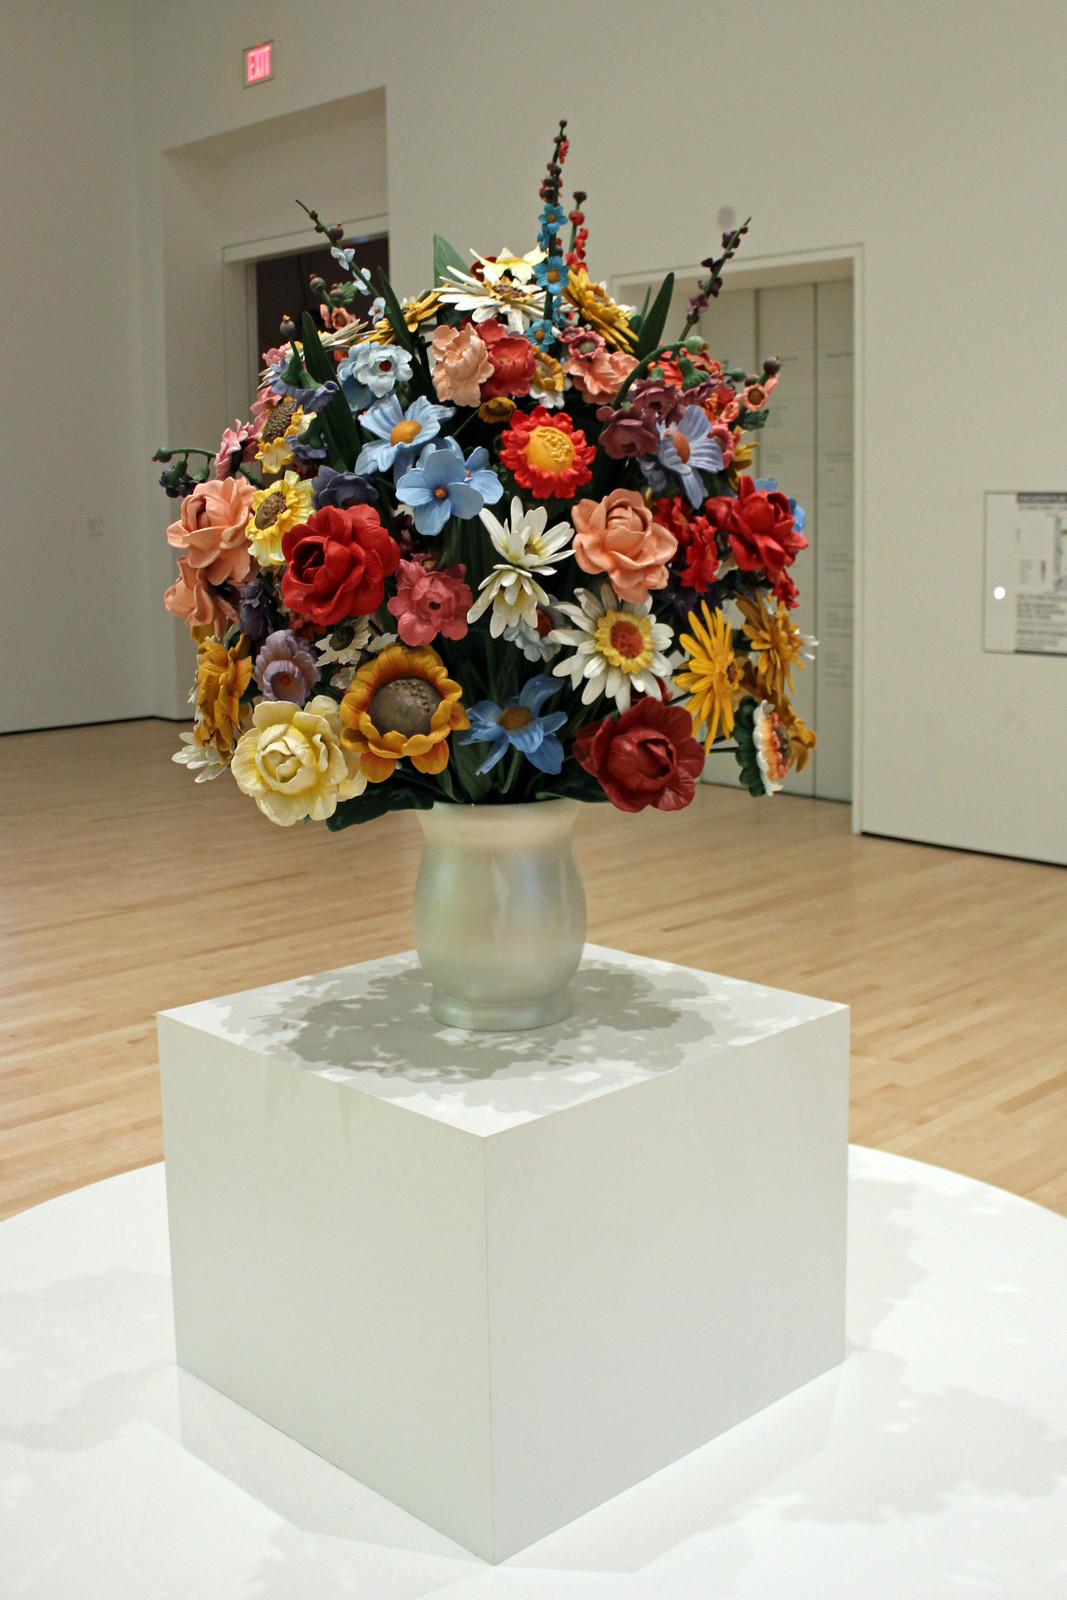 Large Vase of Flowers, by Jeff Koons